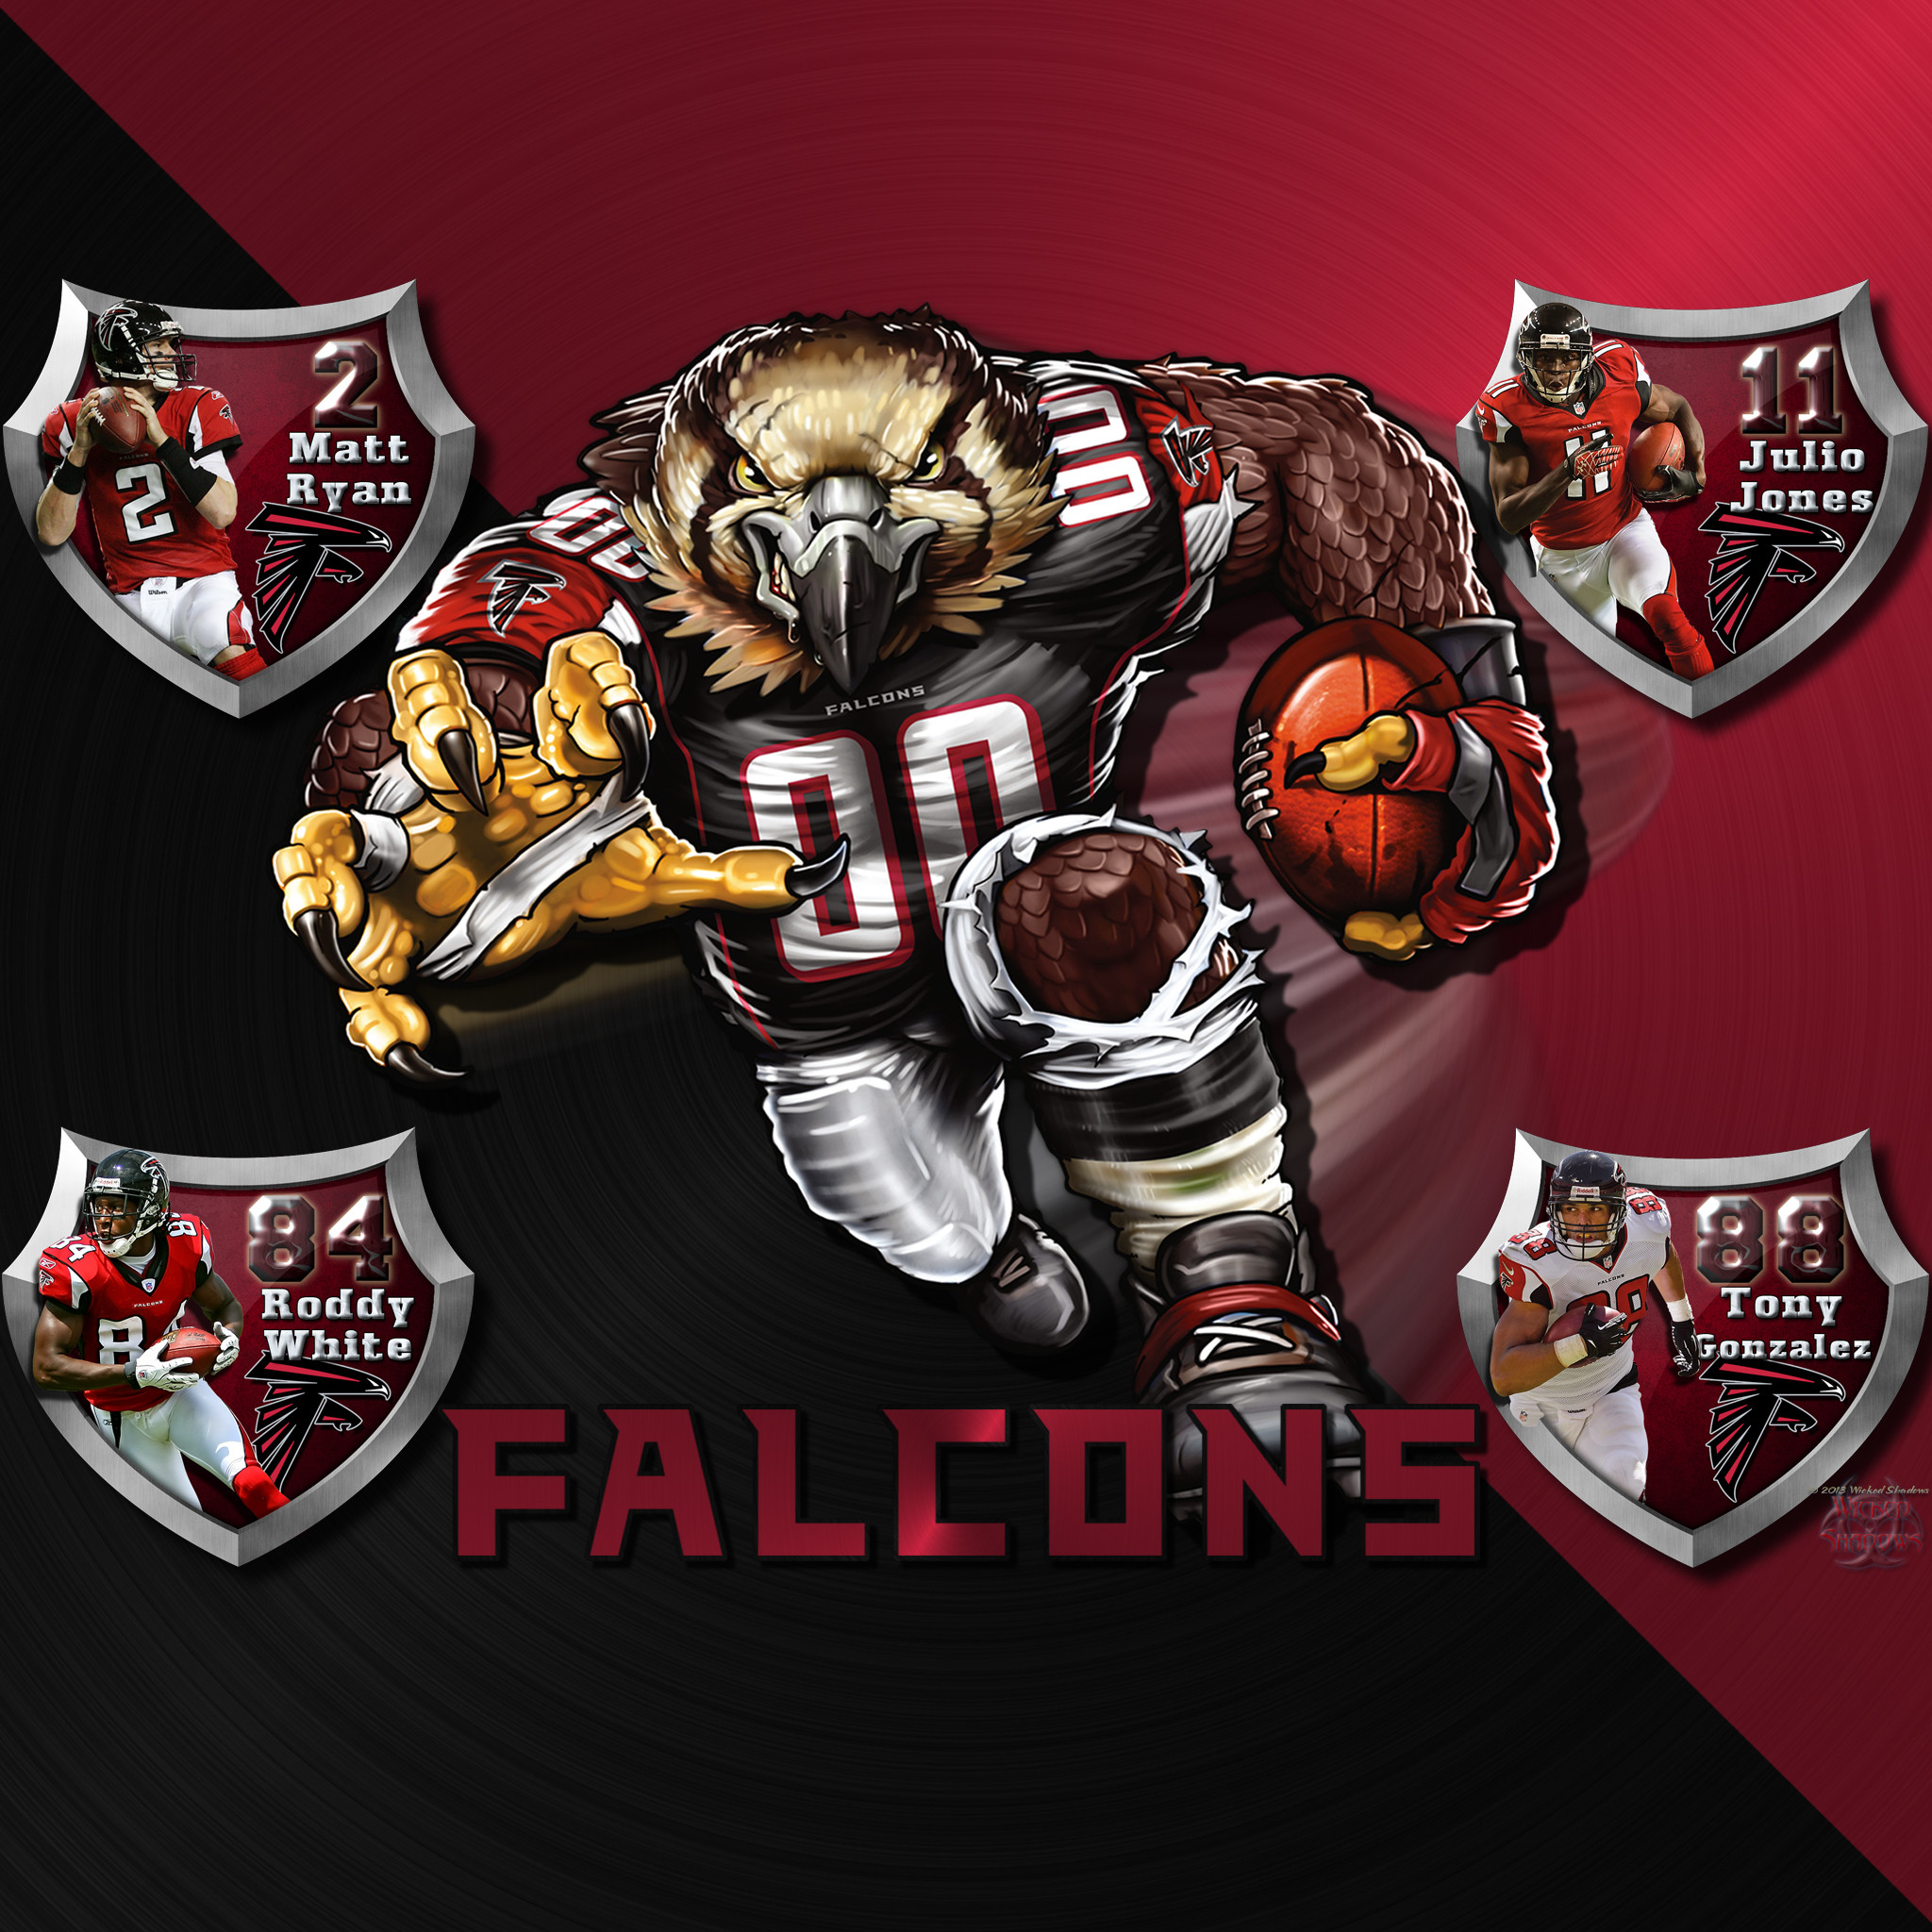 2048x2048 Atlanta Falcons Logo Wallpaper | IPhone / iPod Touch | Ipad | Android  Universal | Tablet